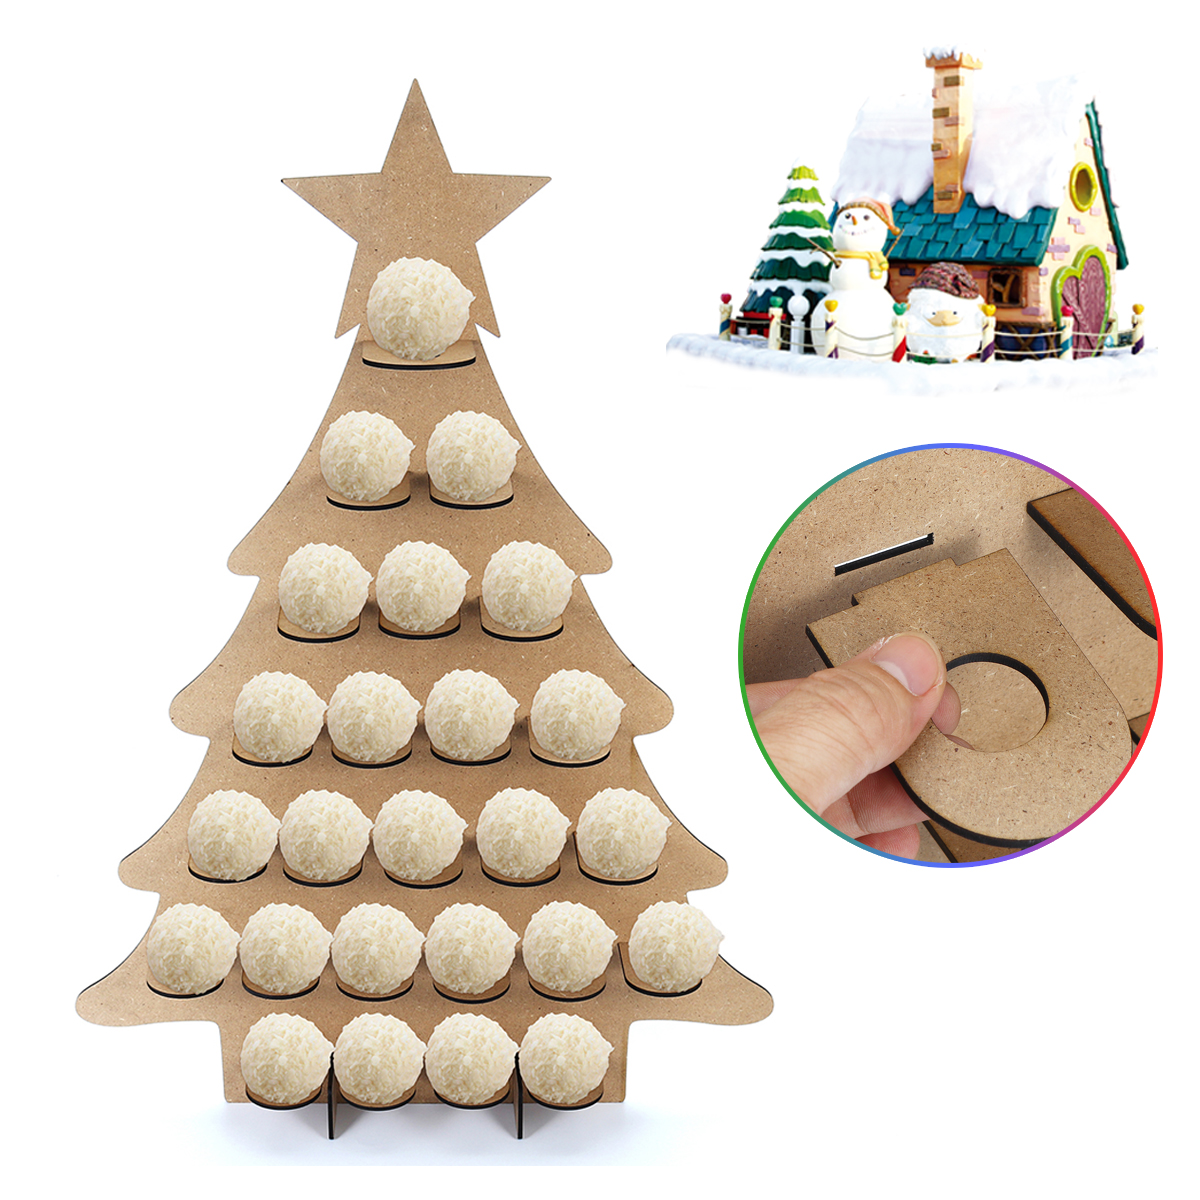 Wooden-Family-Advent-Calendar-Christmas-Tree-25-Chocolates-Stand-Rack-DIY-Decorations-1458960-2